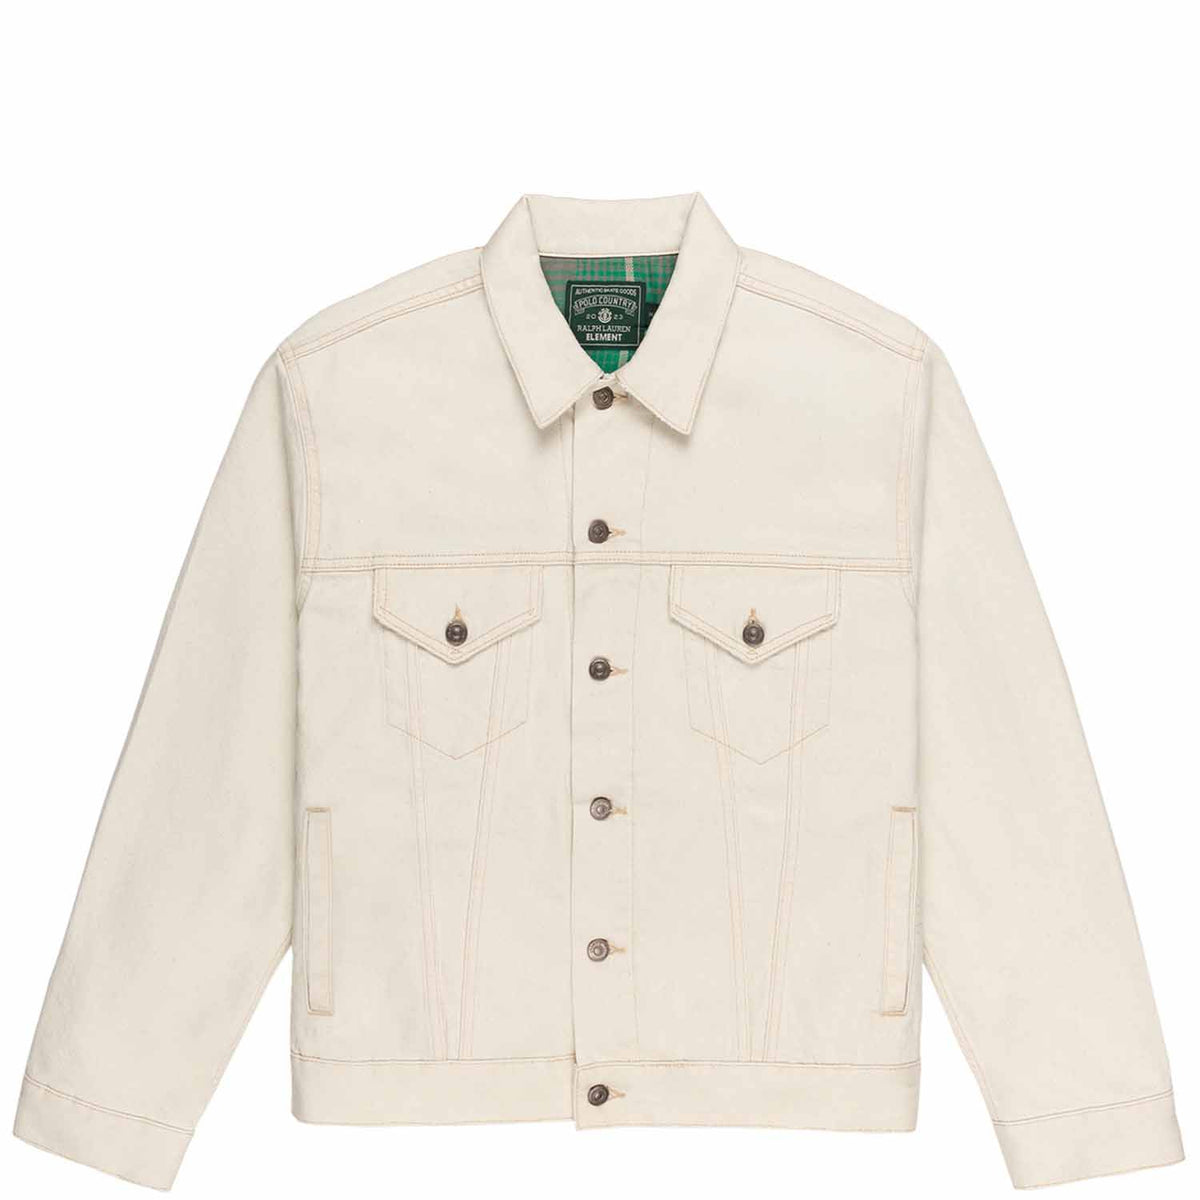 Polo Ralph Lauren x Element Trucker Jacket in cream. Two front breast pockets, on on each side. Plaid print inside jacket. Side pockets on each side of waist.